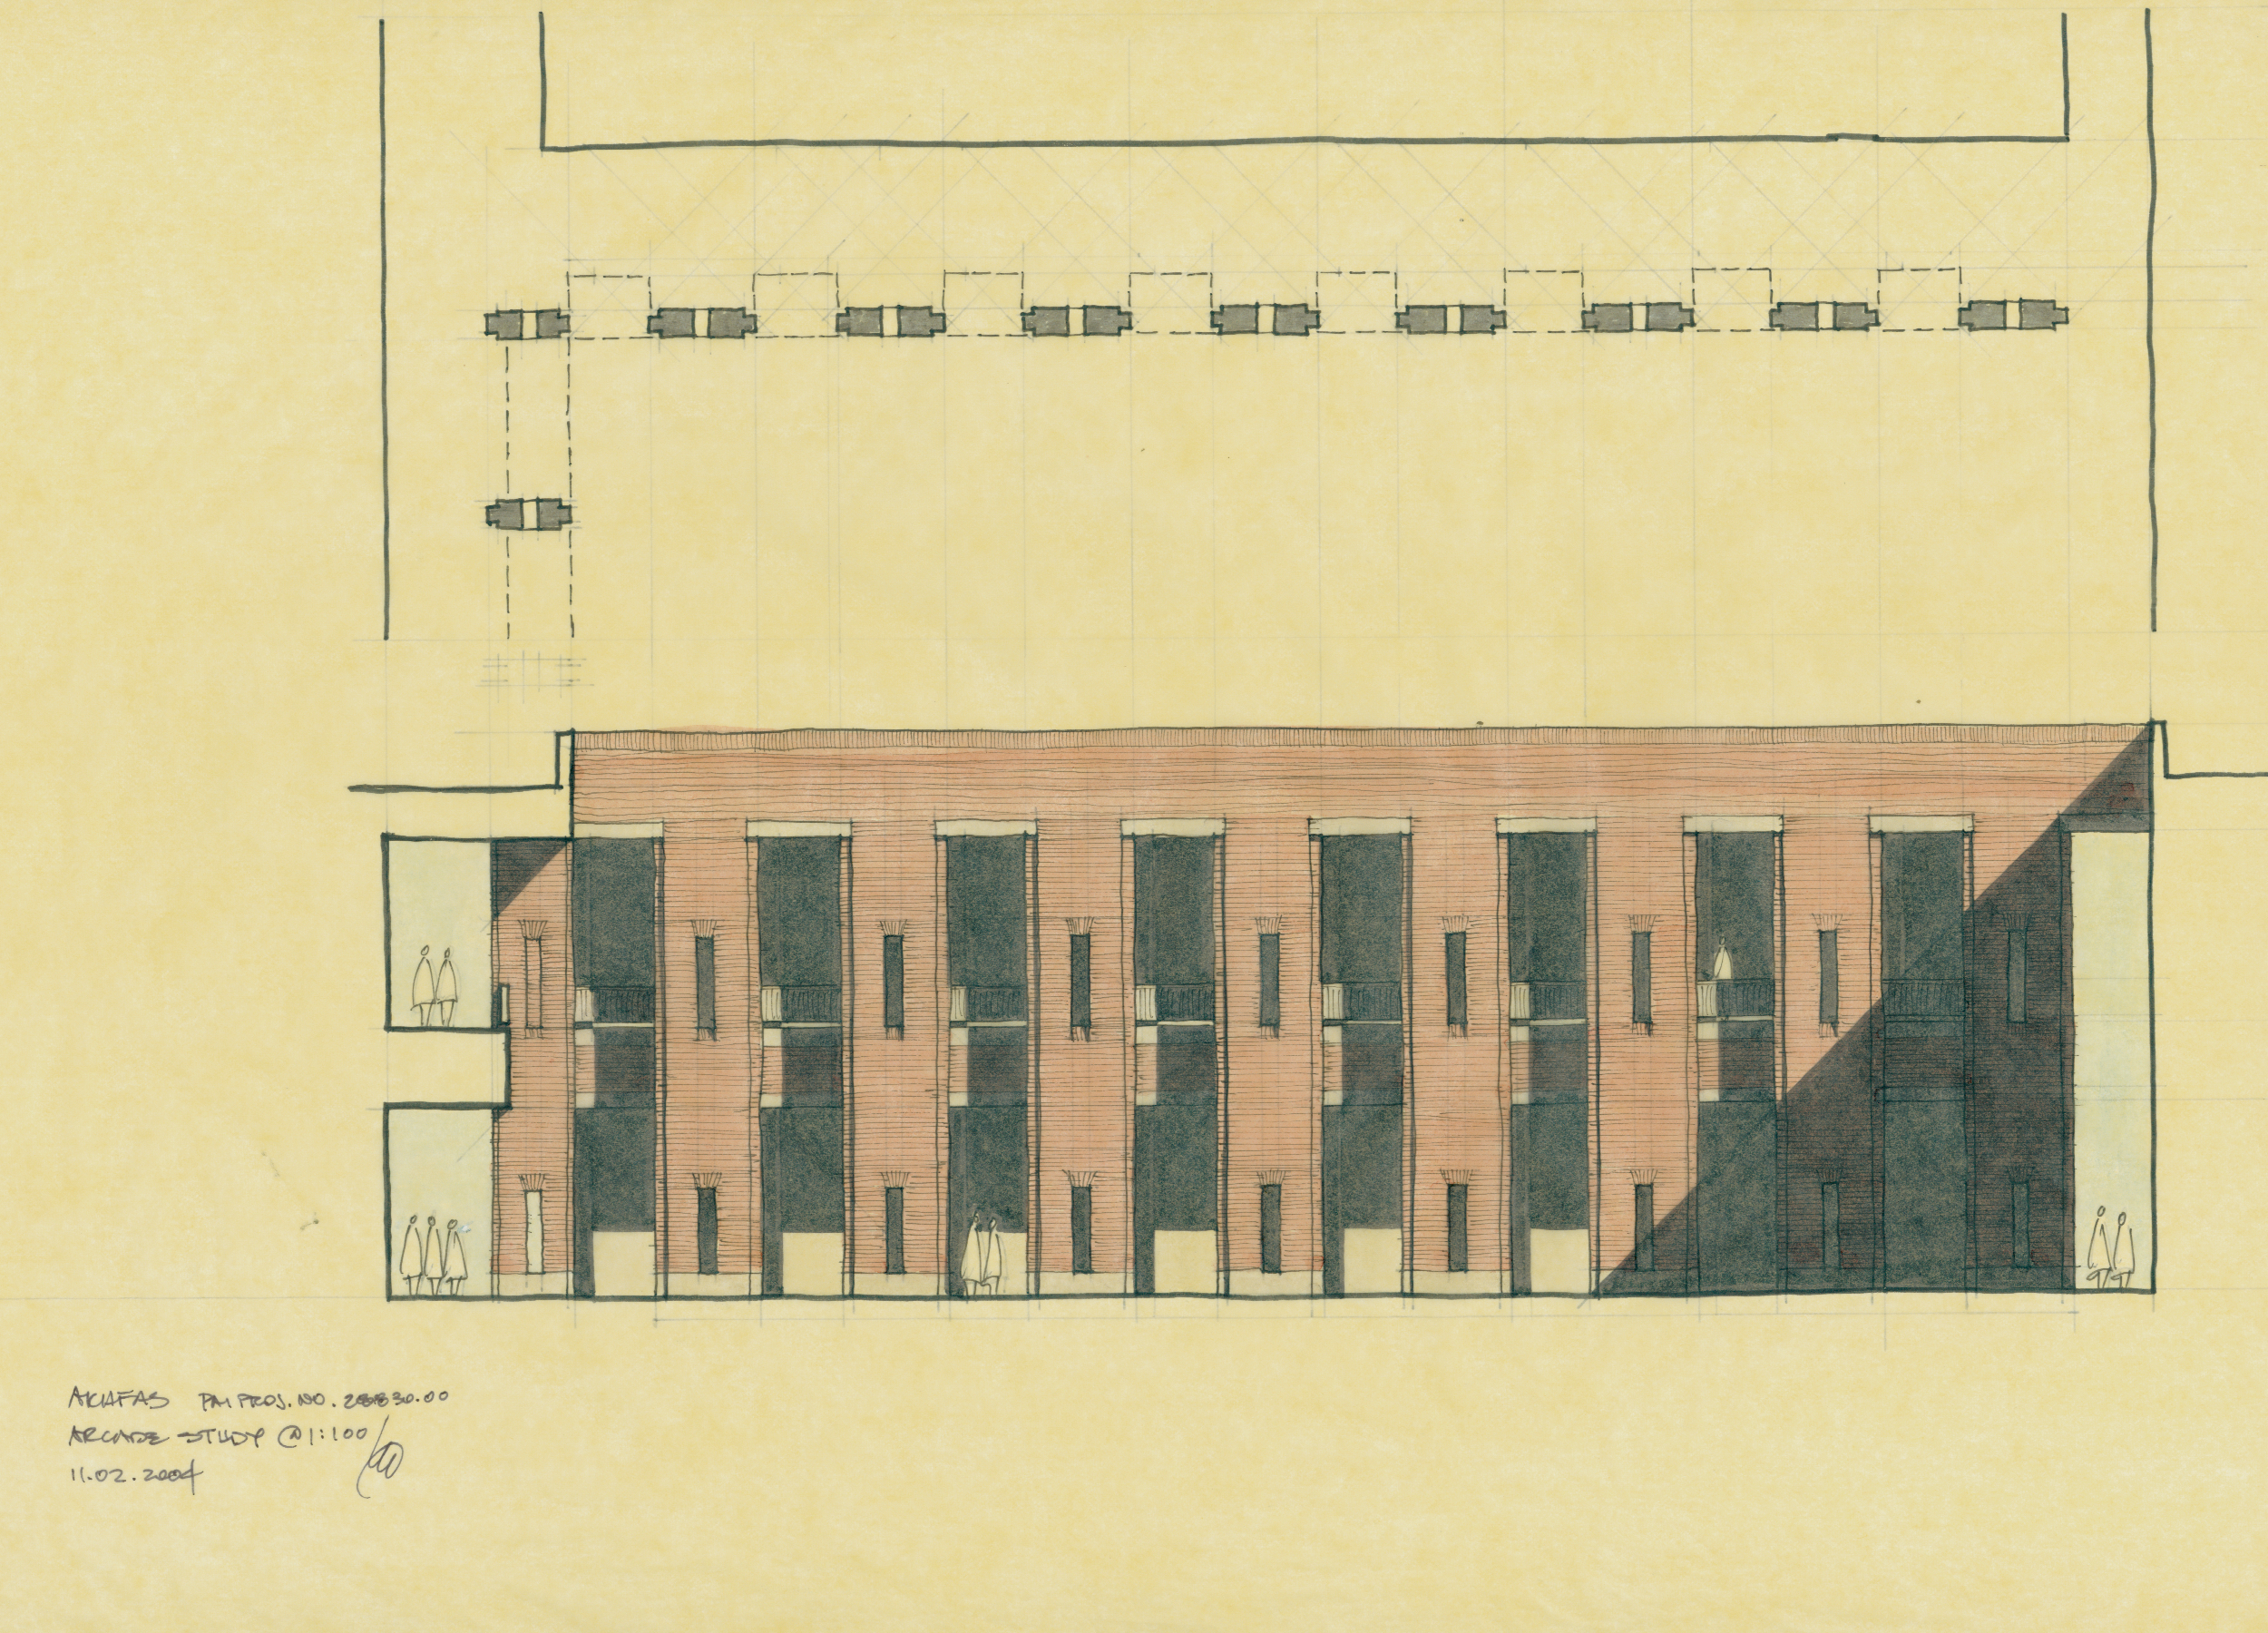 Sketch studies of verandas for Aga Khan University